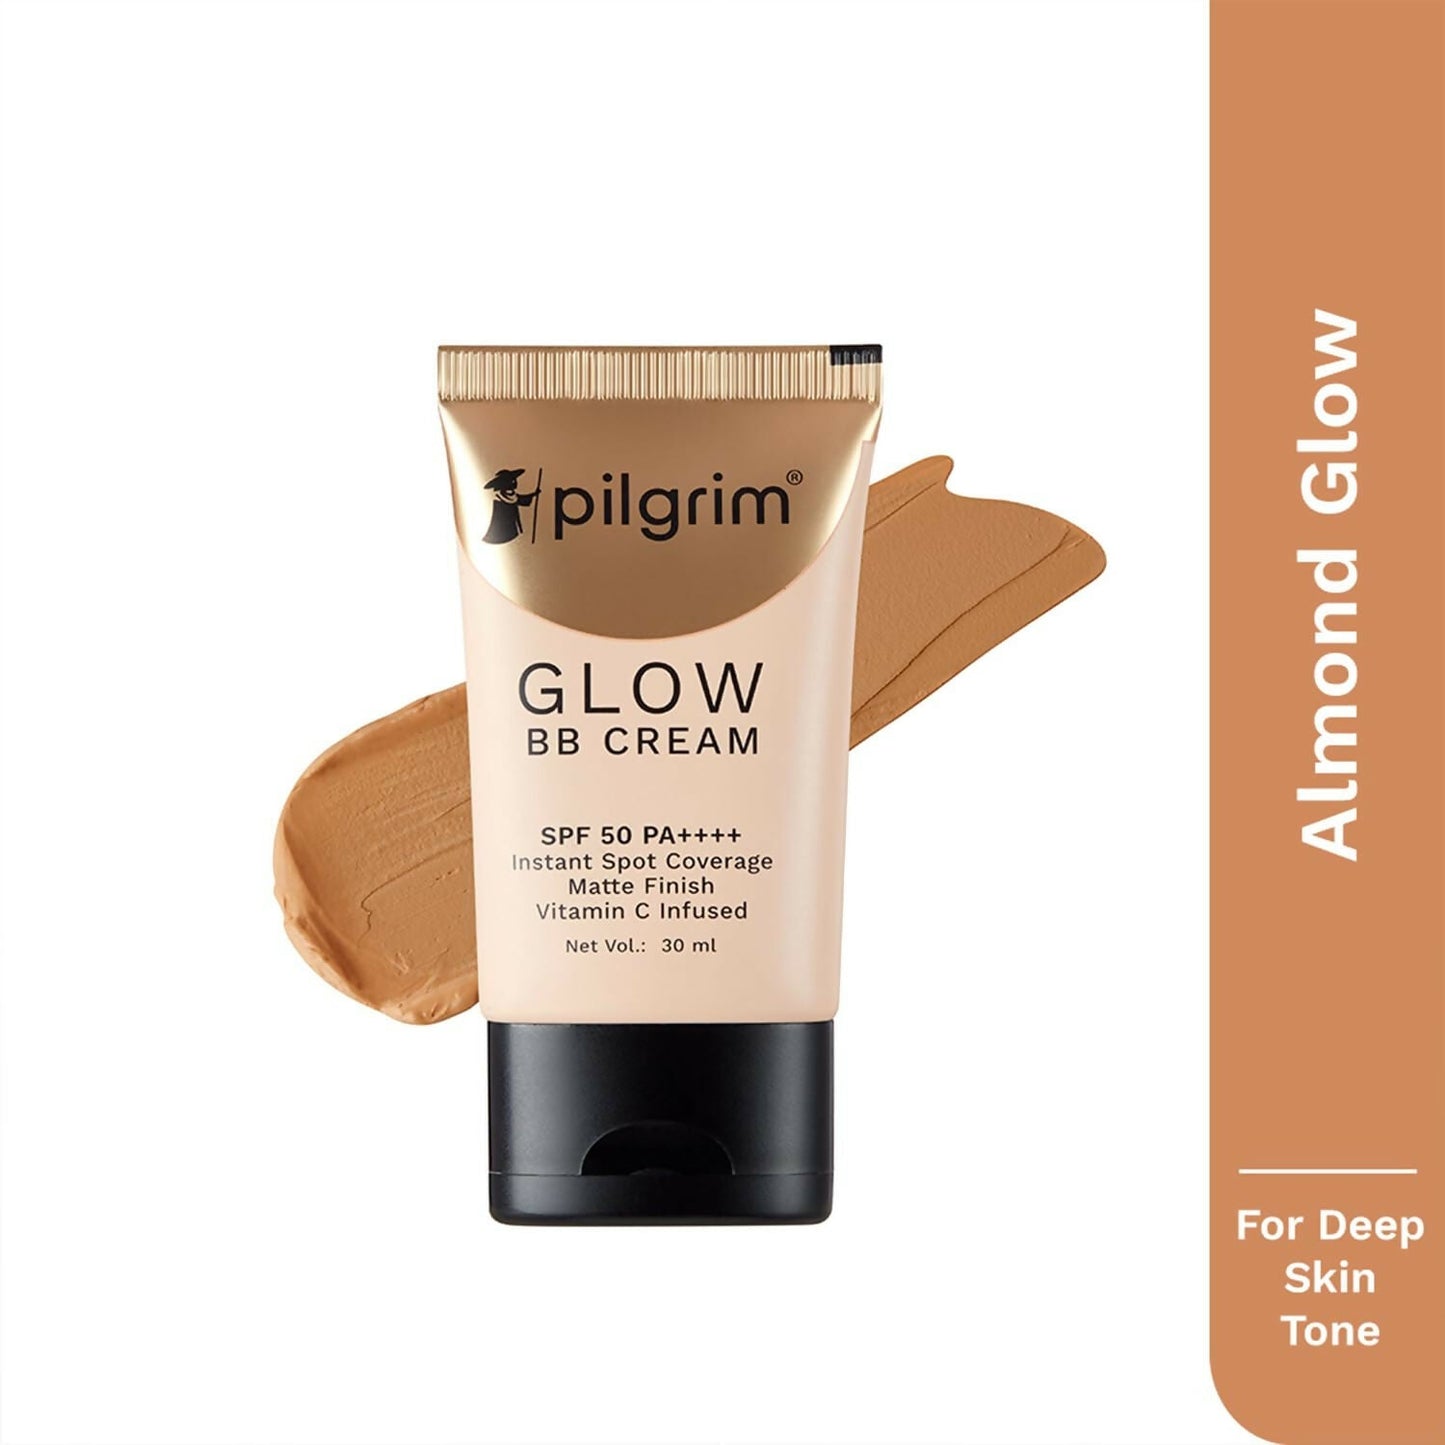 Pilgrim Glow BB Cream SPF 50 PA++++ Instant Spot Coverage Matte Finish Vitamin C Infused - Almond Glow